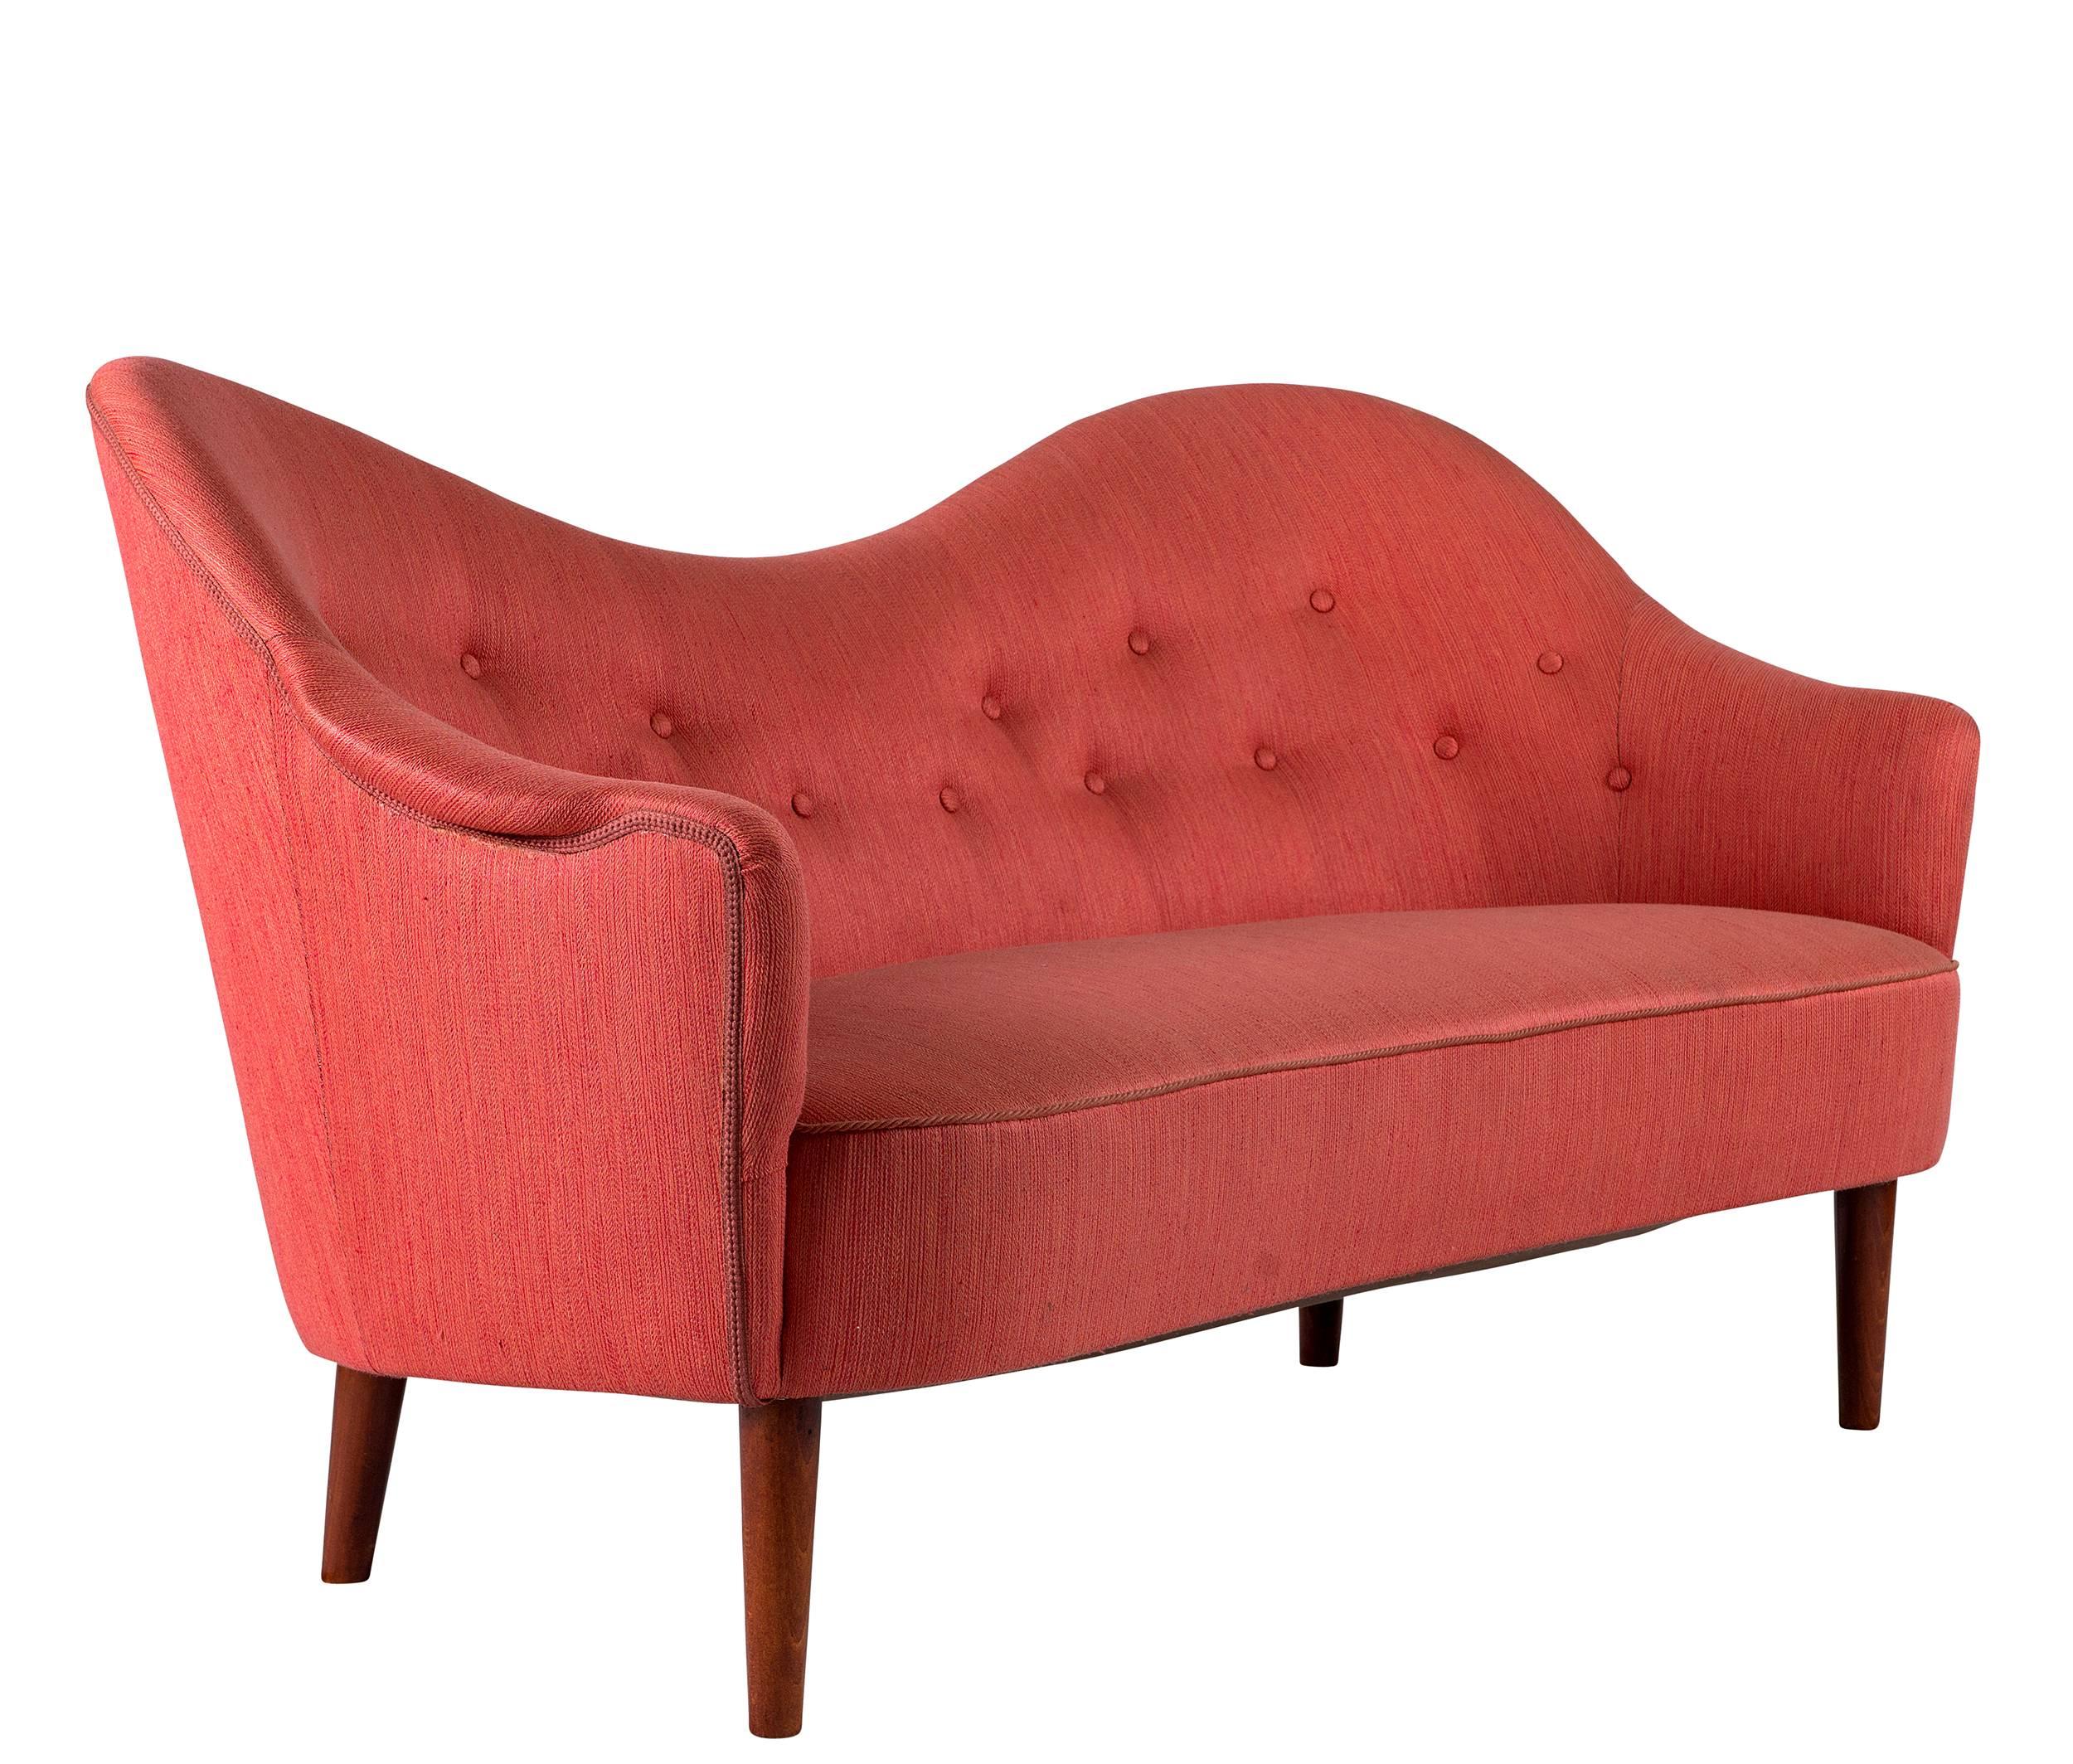 Carl Malmsten "Samspel" sofa designed in 1955 and produced by O.H. Sjogren.